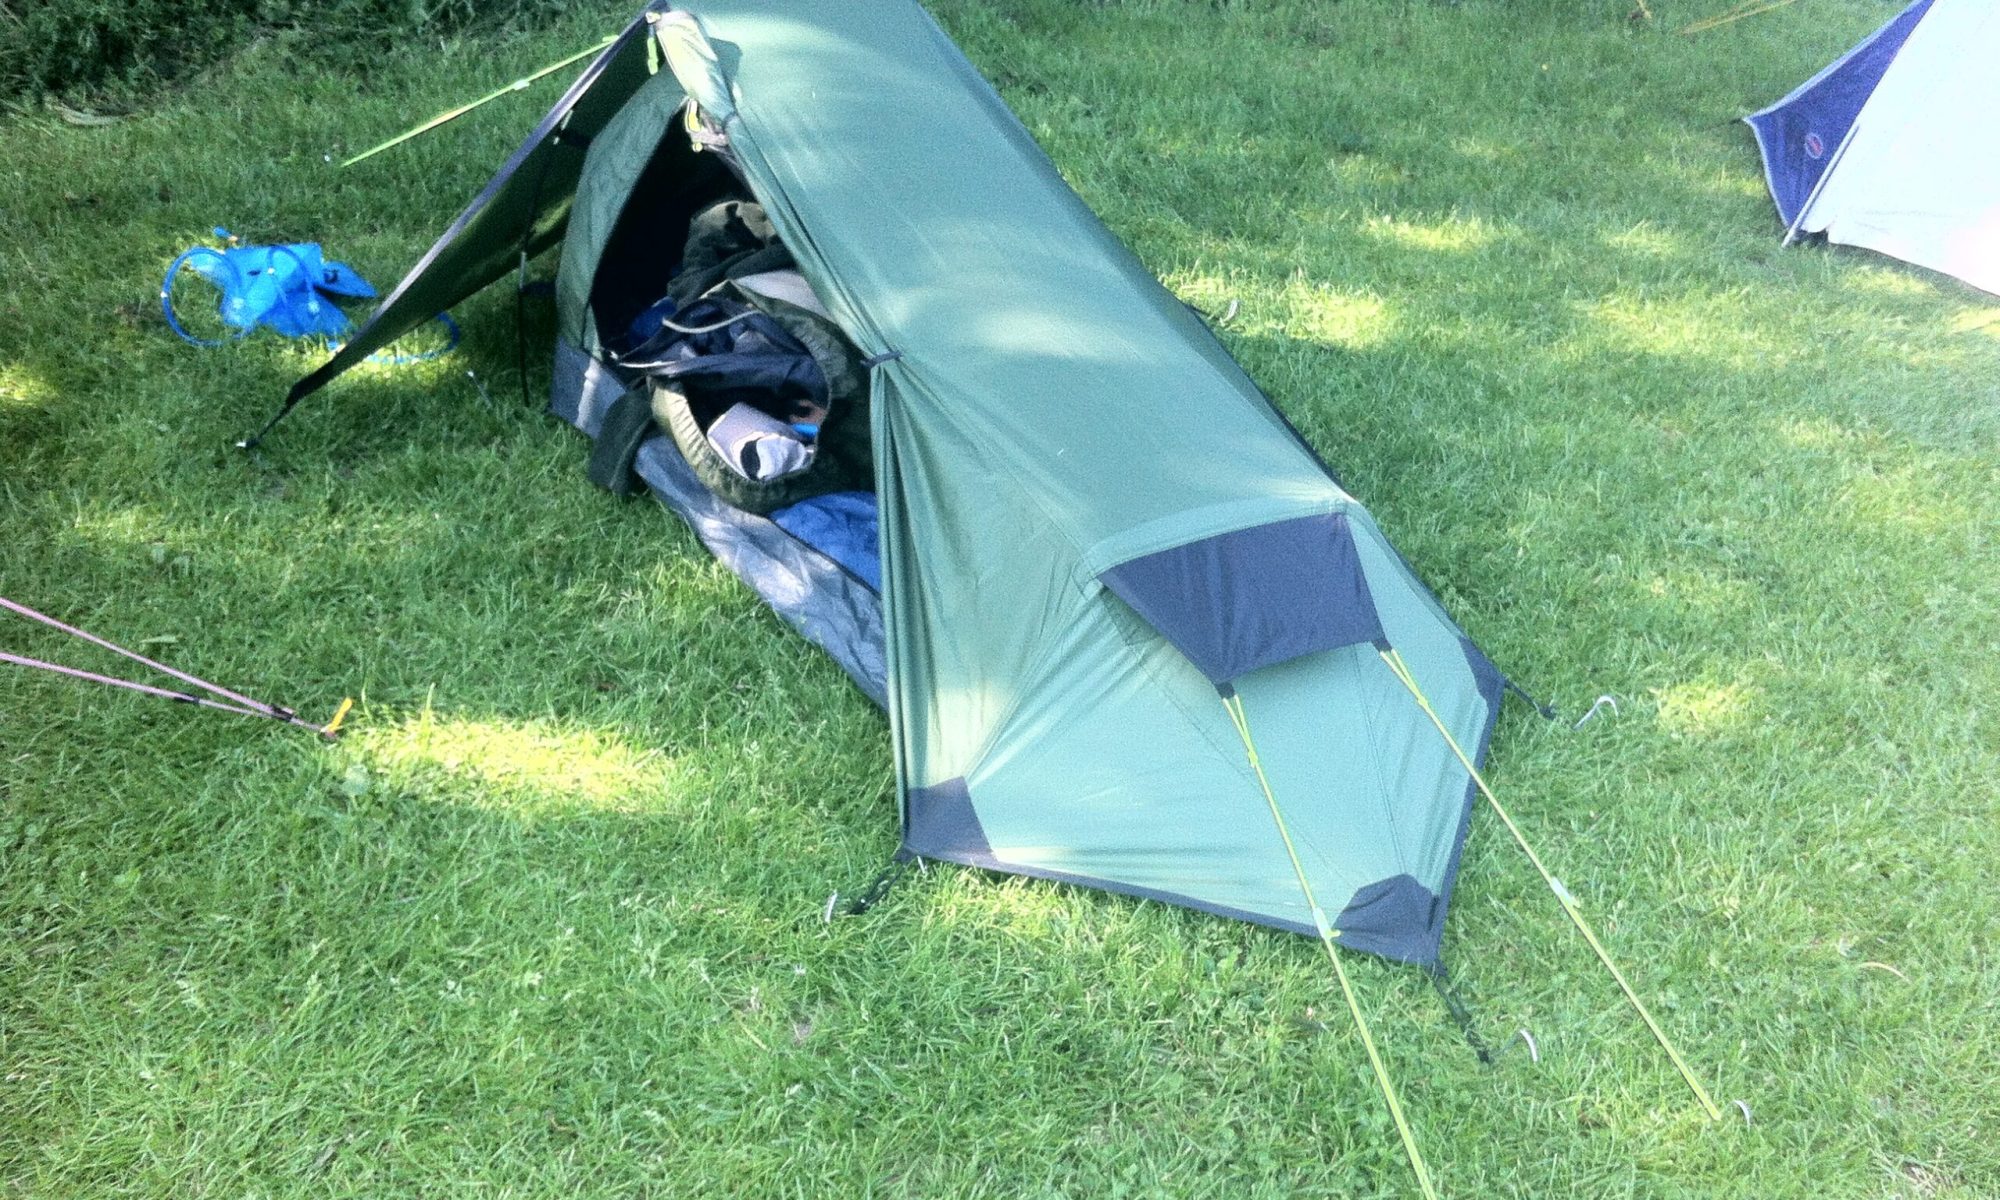 Simon's Tent